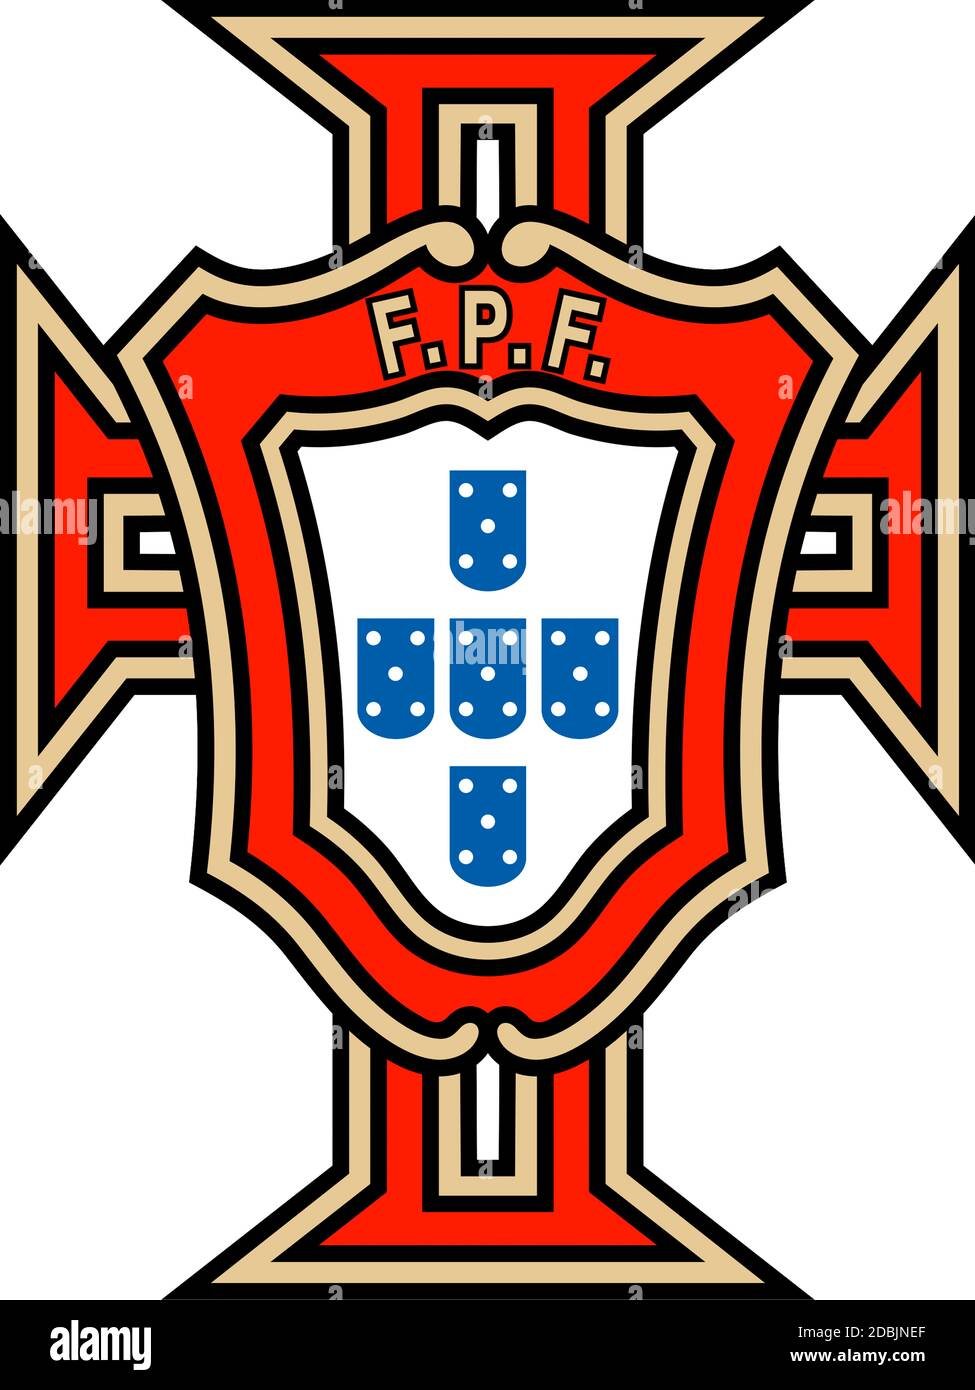 Seleccion portuguesa de futbol